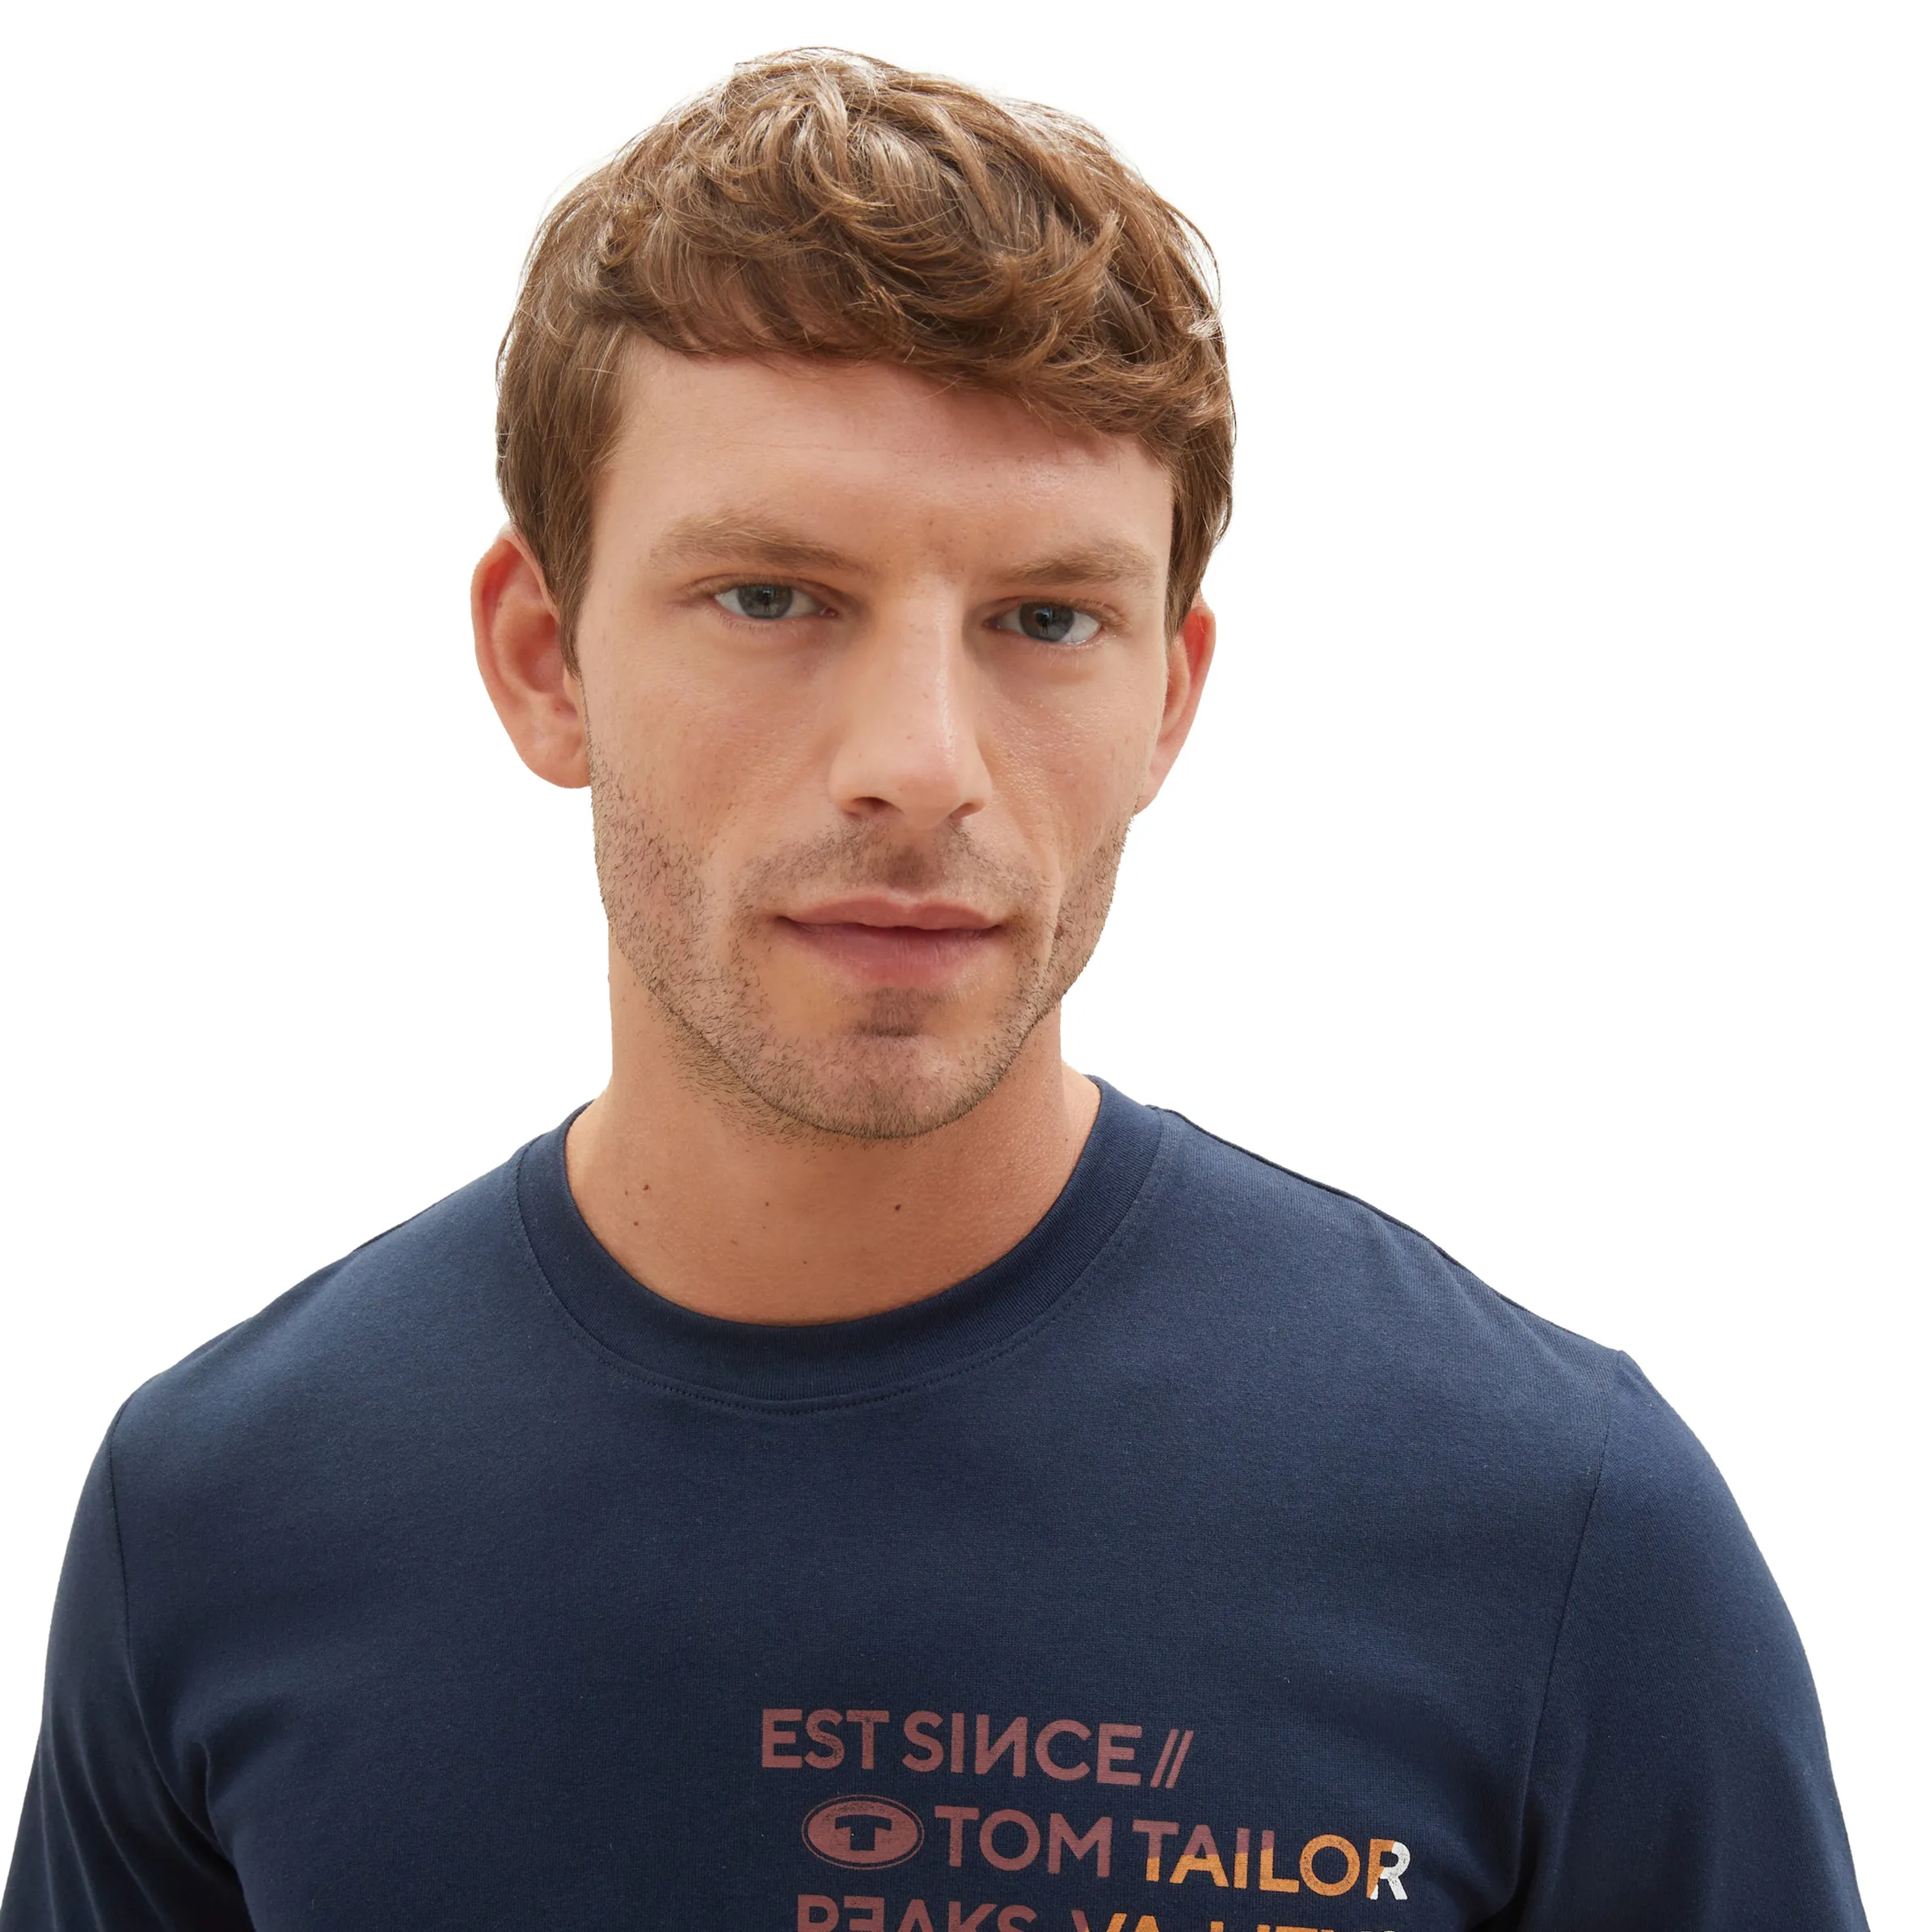 Tom Tailor 1037848 printed t-shirt Blau 884270 10668 3